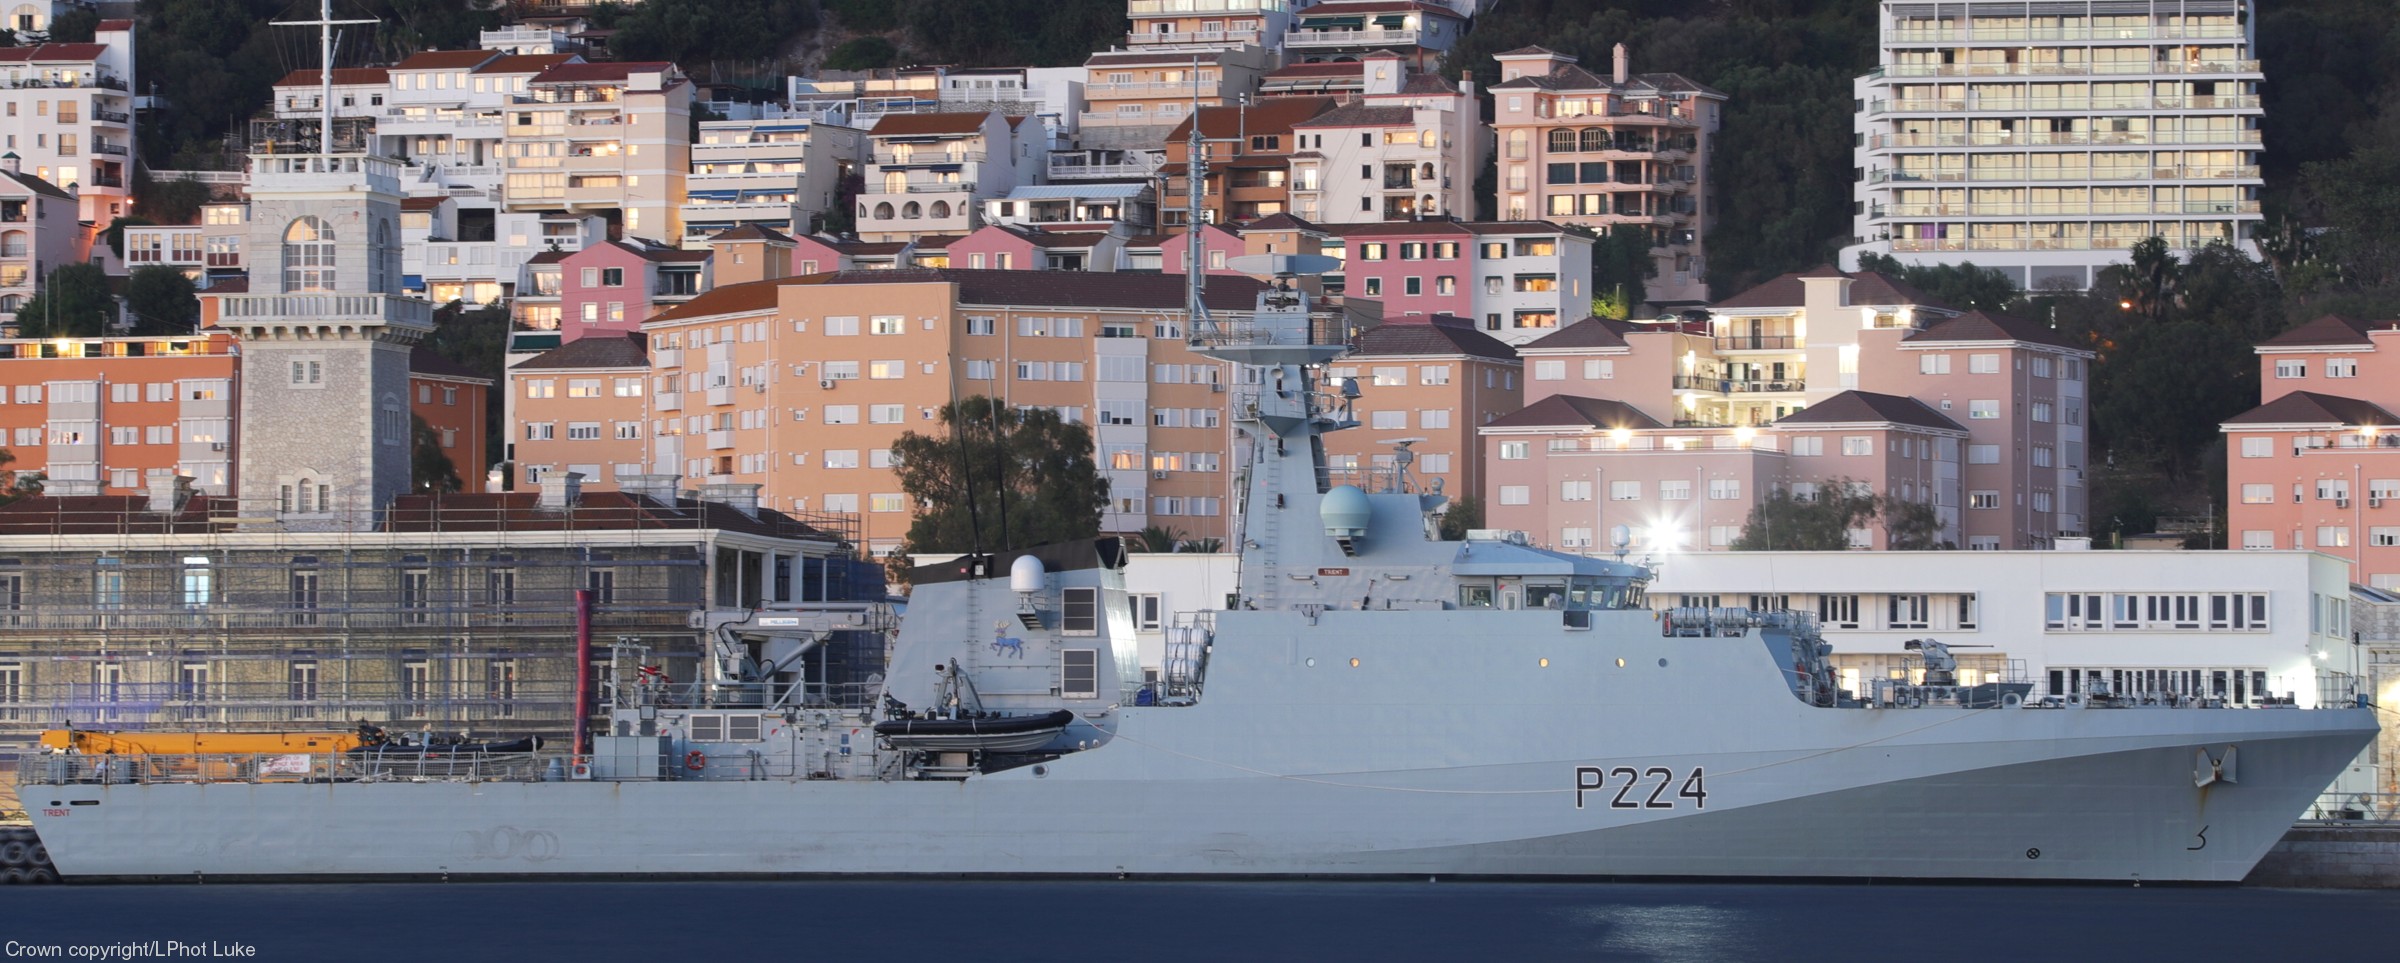 p224 hms trent river class offshore patrol vessel opv royal navy 20